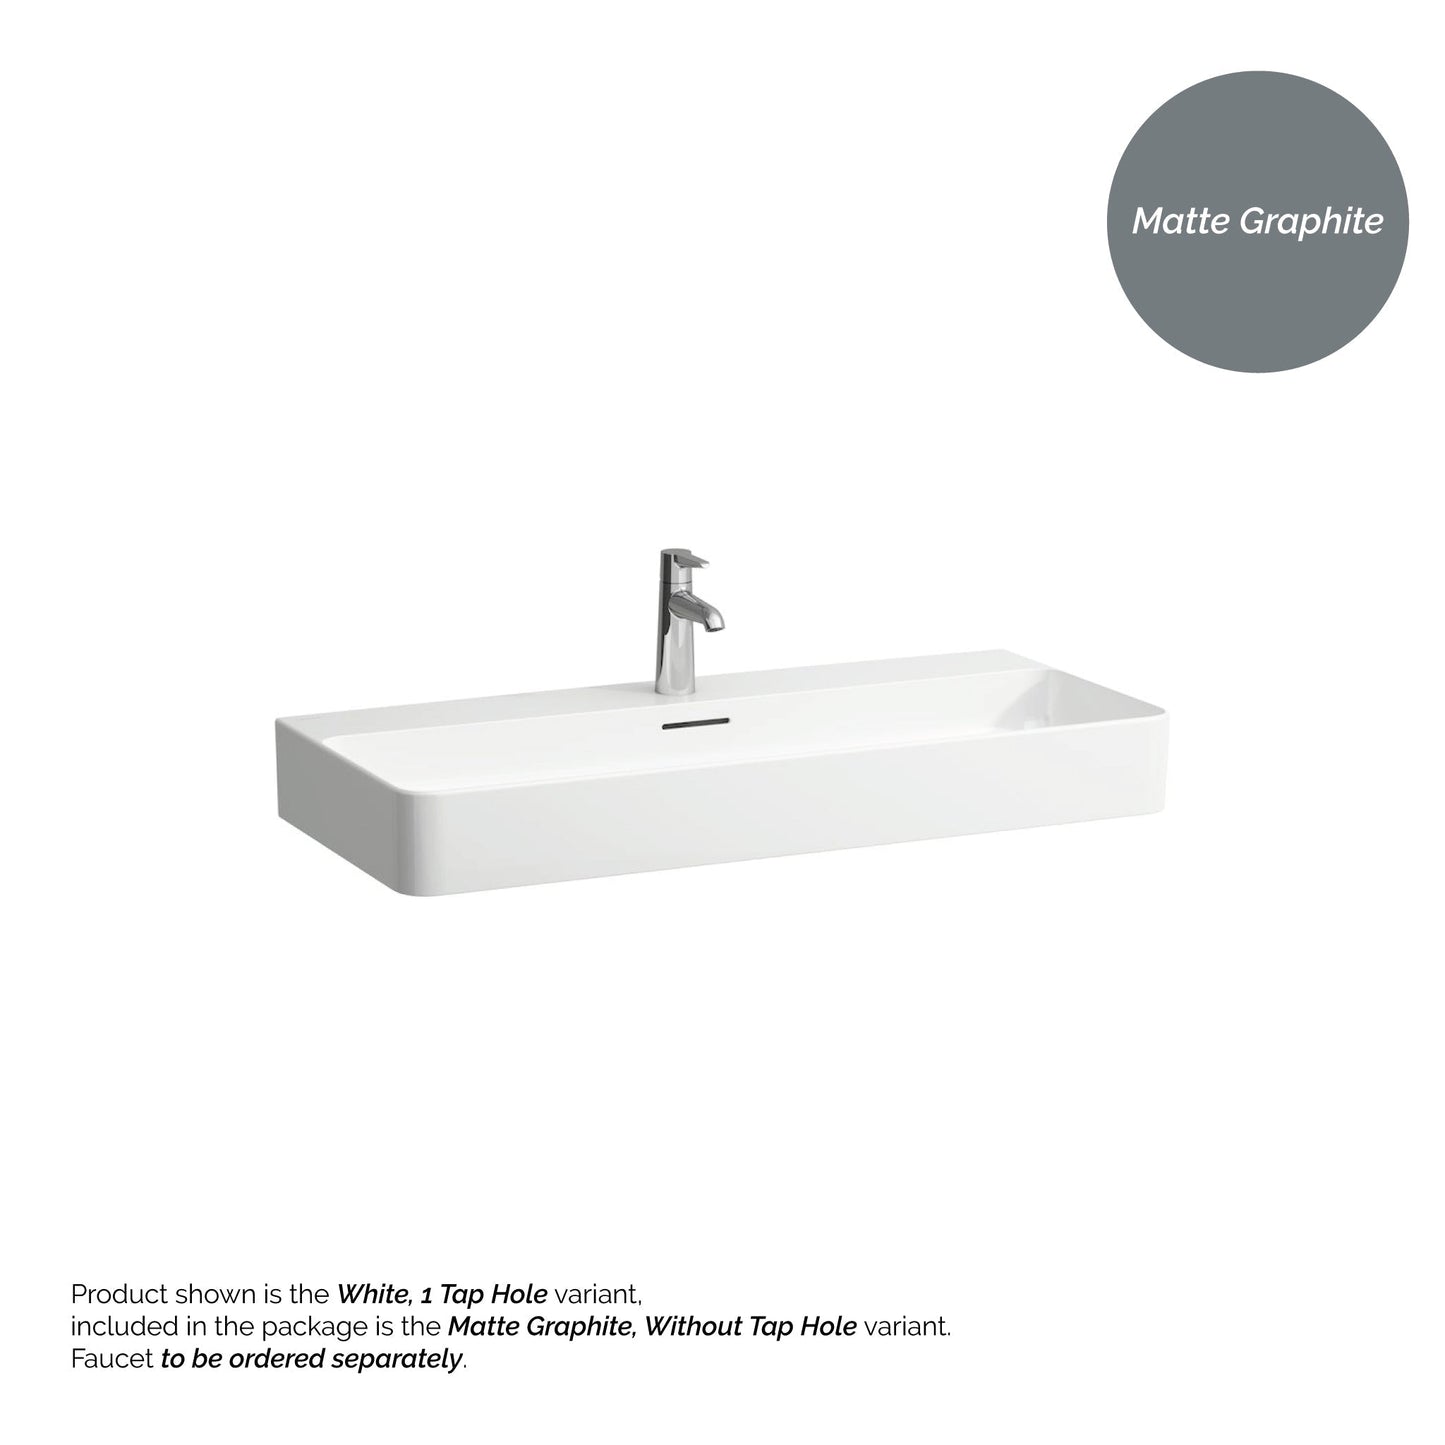 Laufen Val 37" x 17" Matte Graphite Ceramic Countertop Bathroom Sink Without Faucet Hole